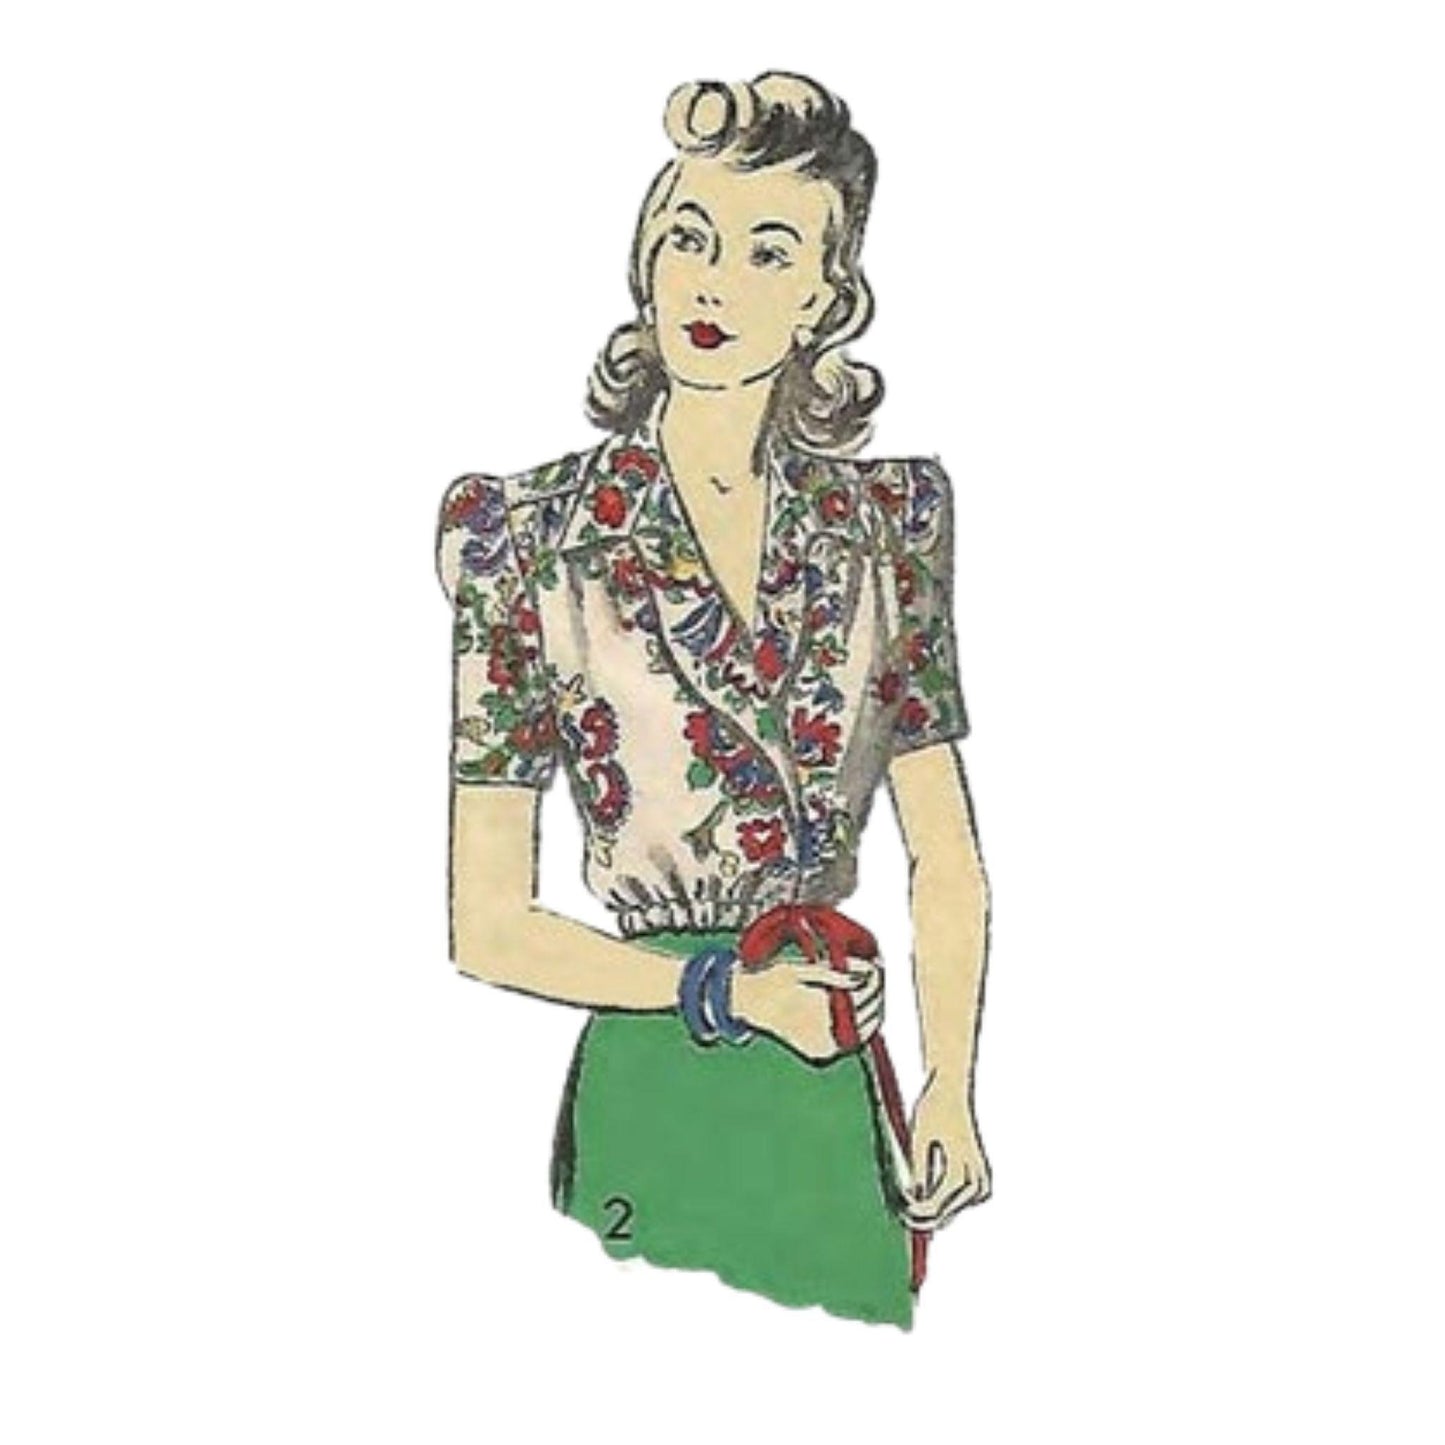 Woman wearing a 1940s blouse